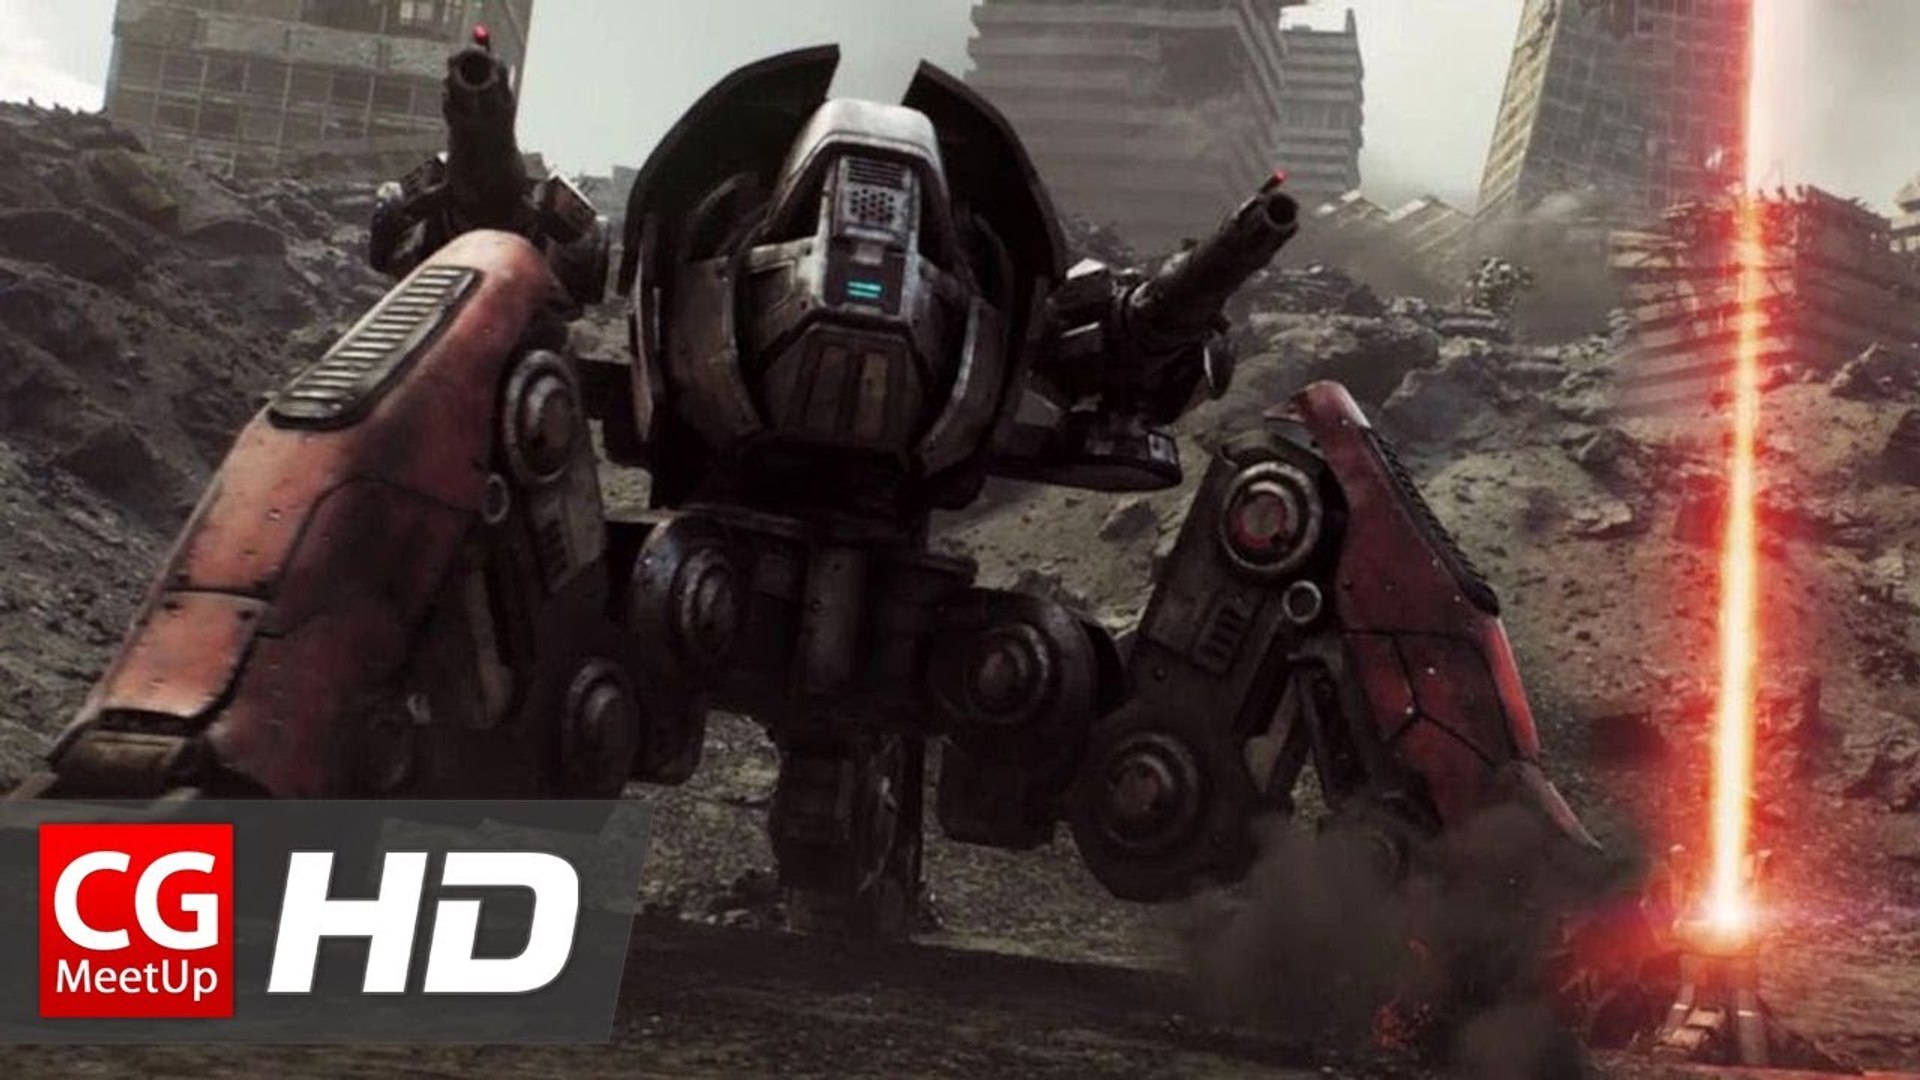 CGI 3D Animated Trailer HD "War Robots" by | CGMeetup video Dailymotion